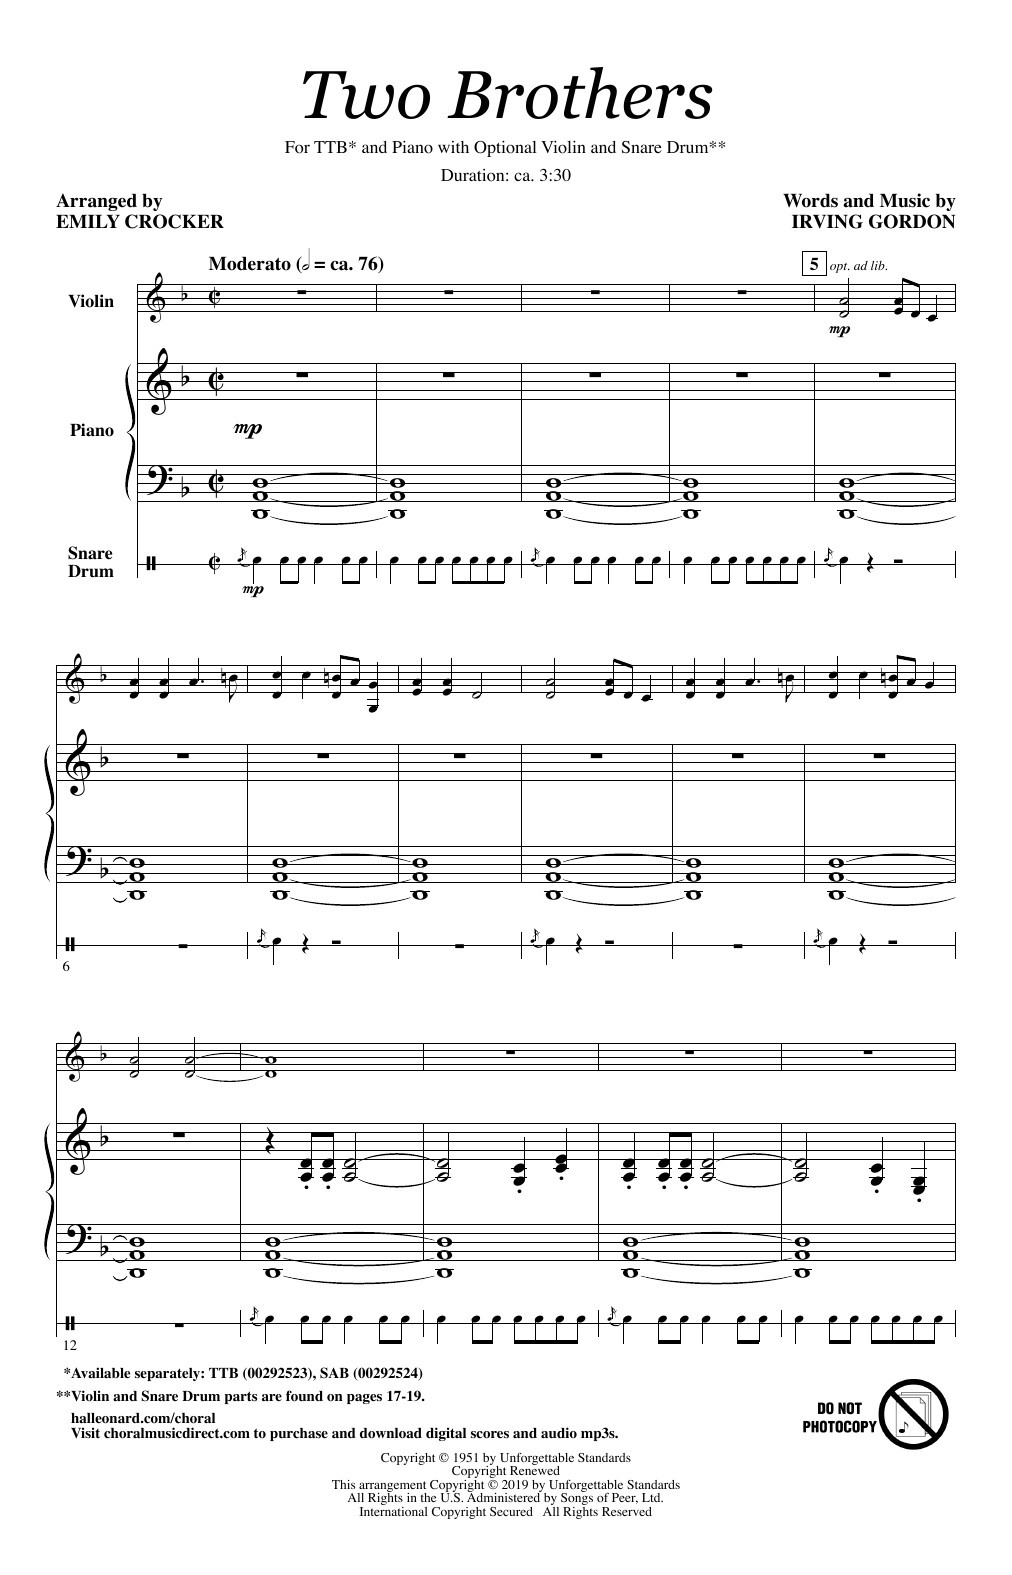 Irving Gordon Two Brothers (arr. Emily Crocker) Sheet Music Notes & Chords for TTBB Choir - Download or Print PDF